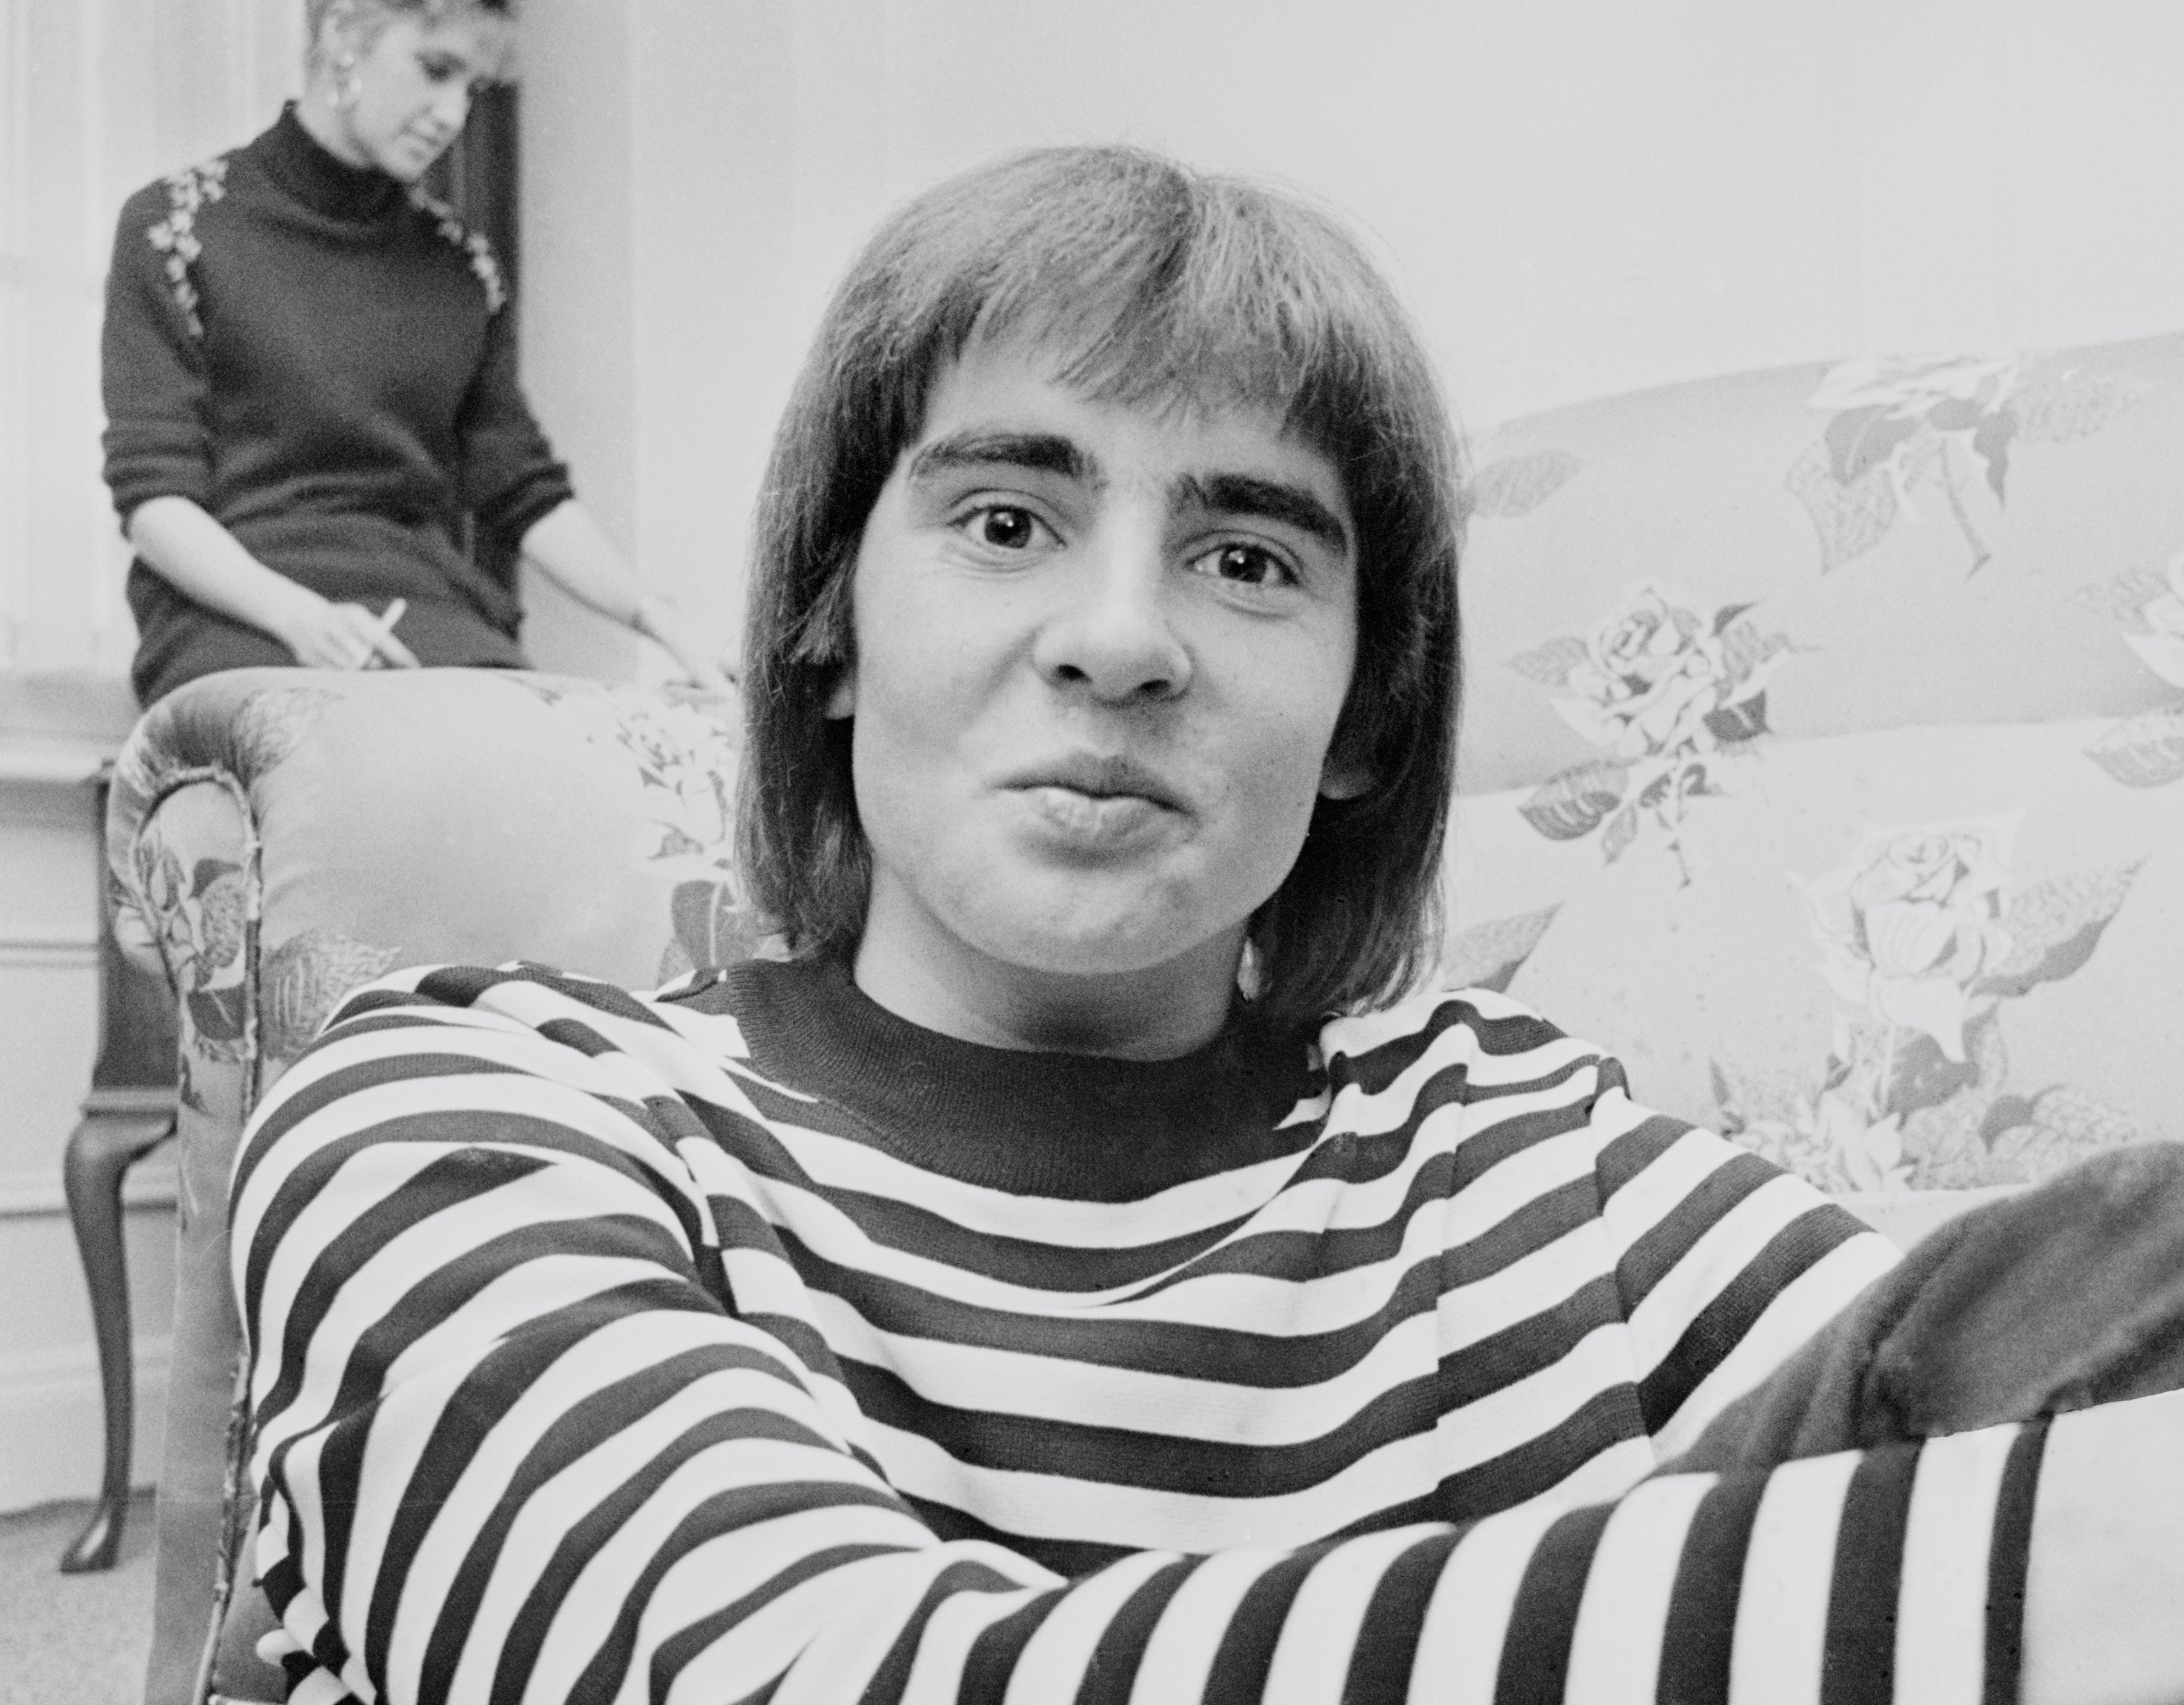 The Monkees' Davy Jones wearing stripes